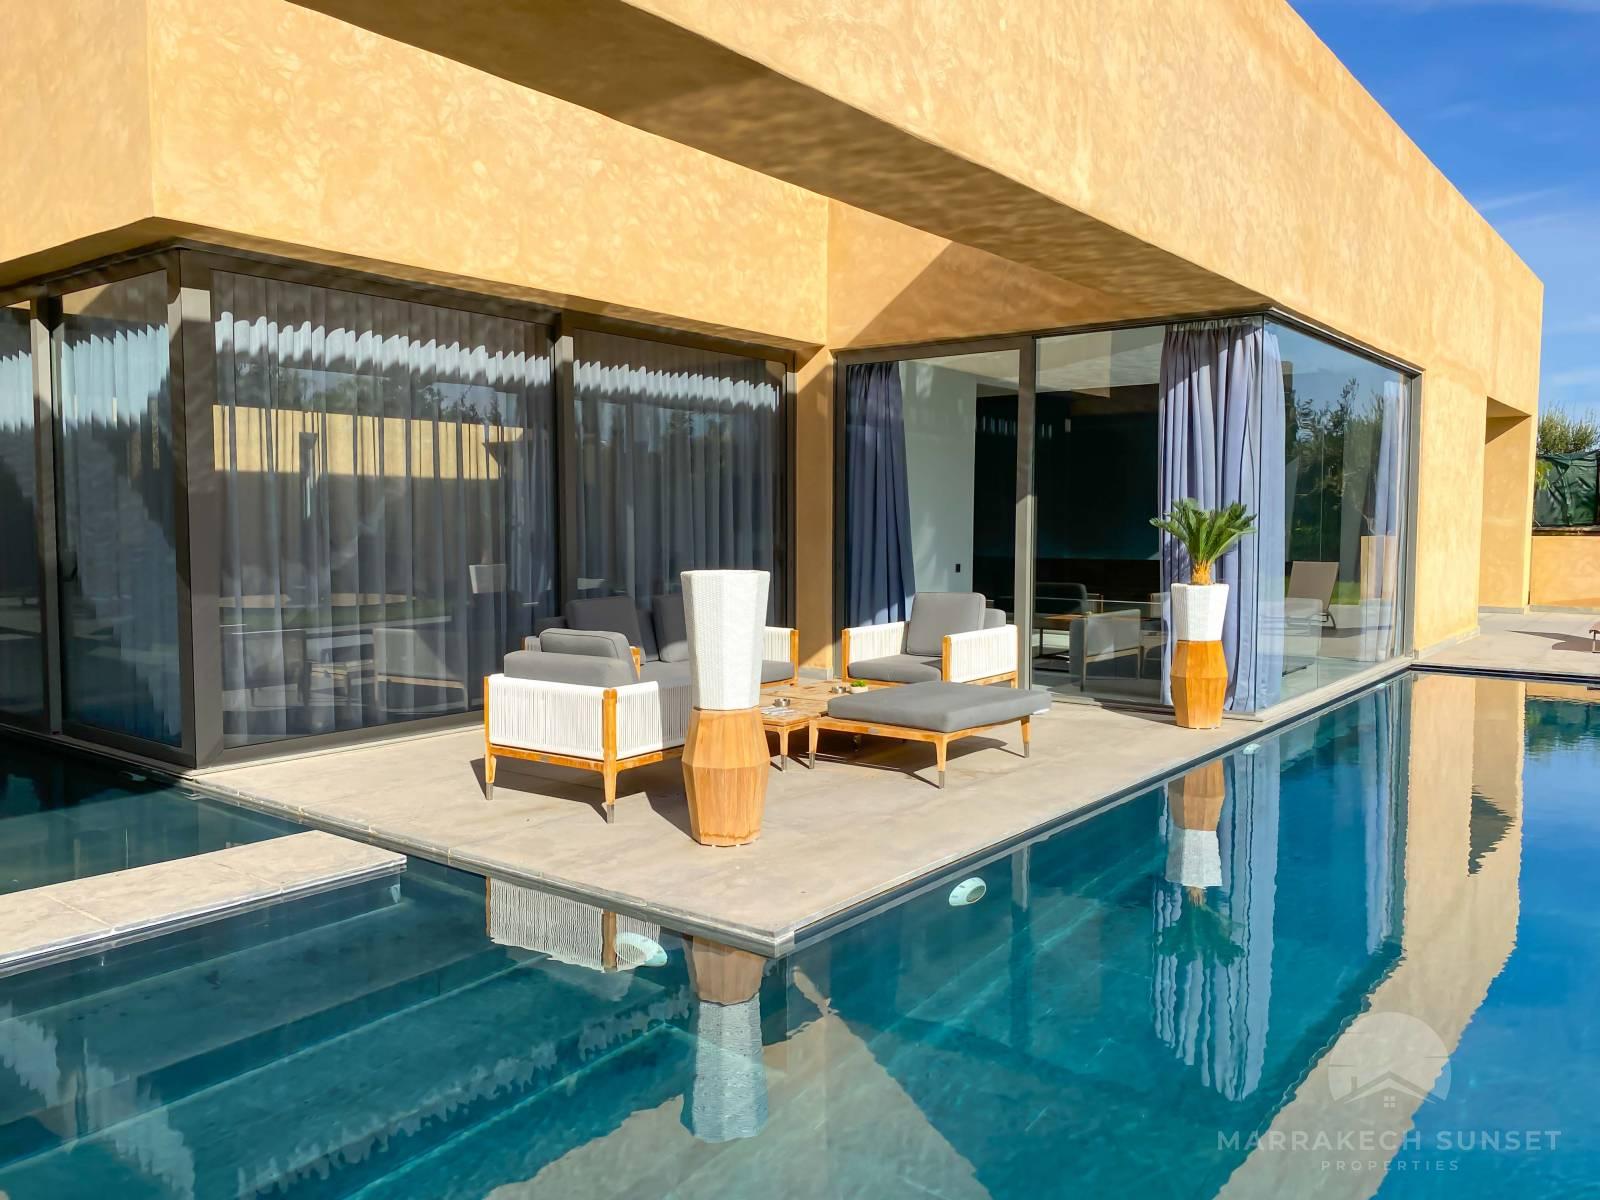 4 bedroom Luxury villa for sale in a private domain Marrakech